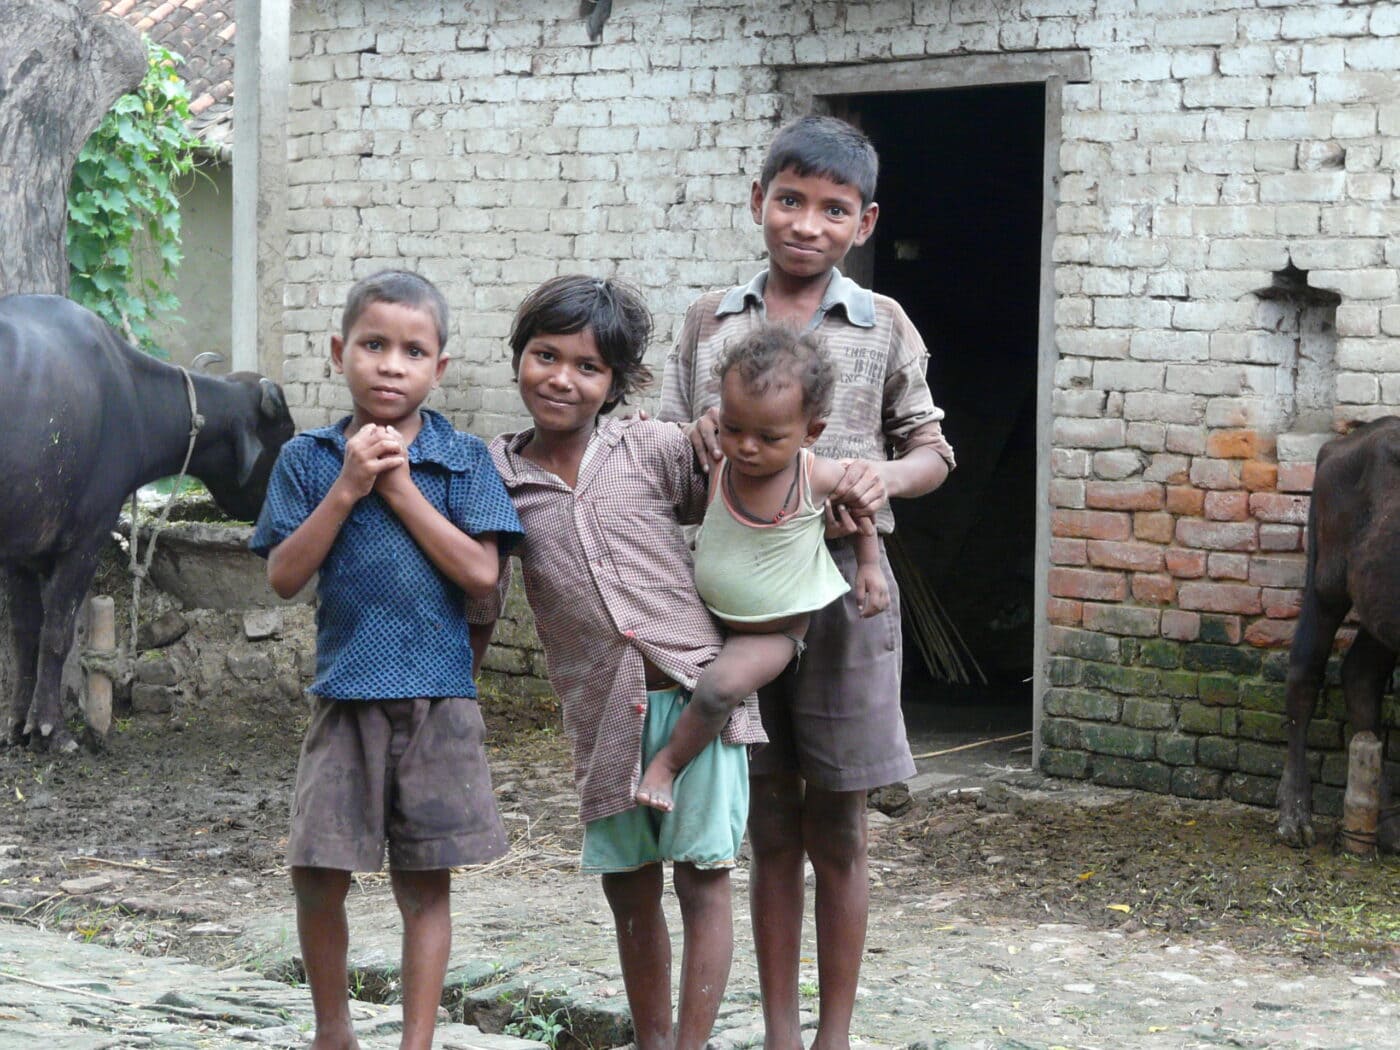 33050_Indara_poserende kinderen_Solidair-met-India